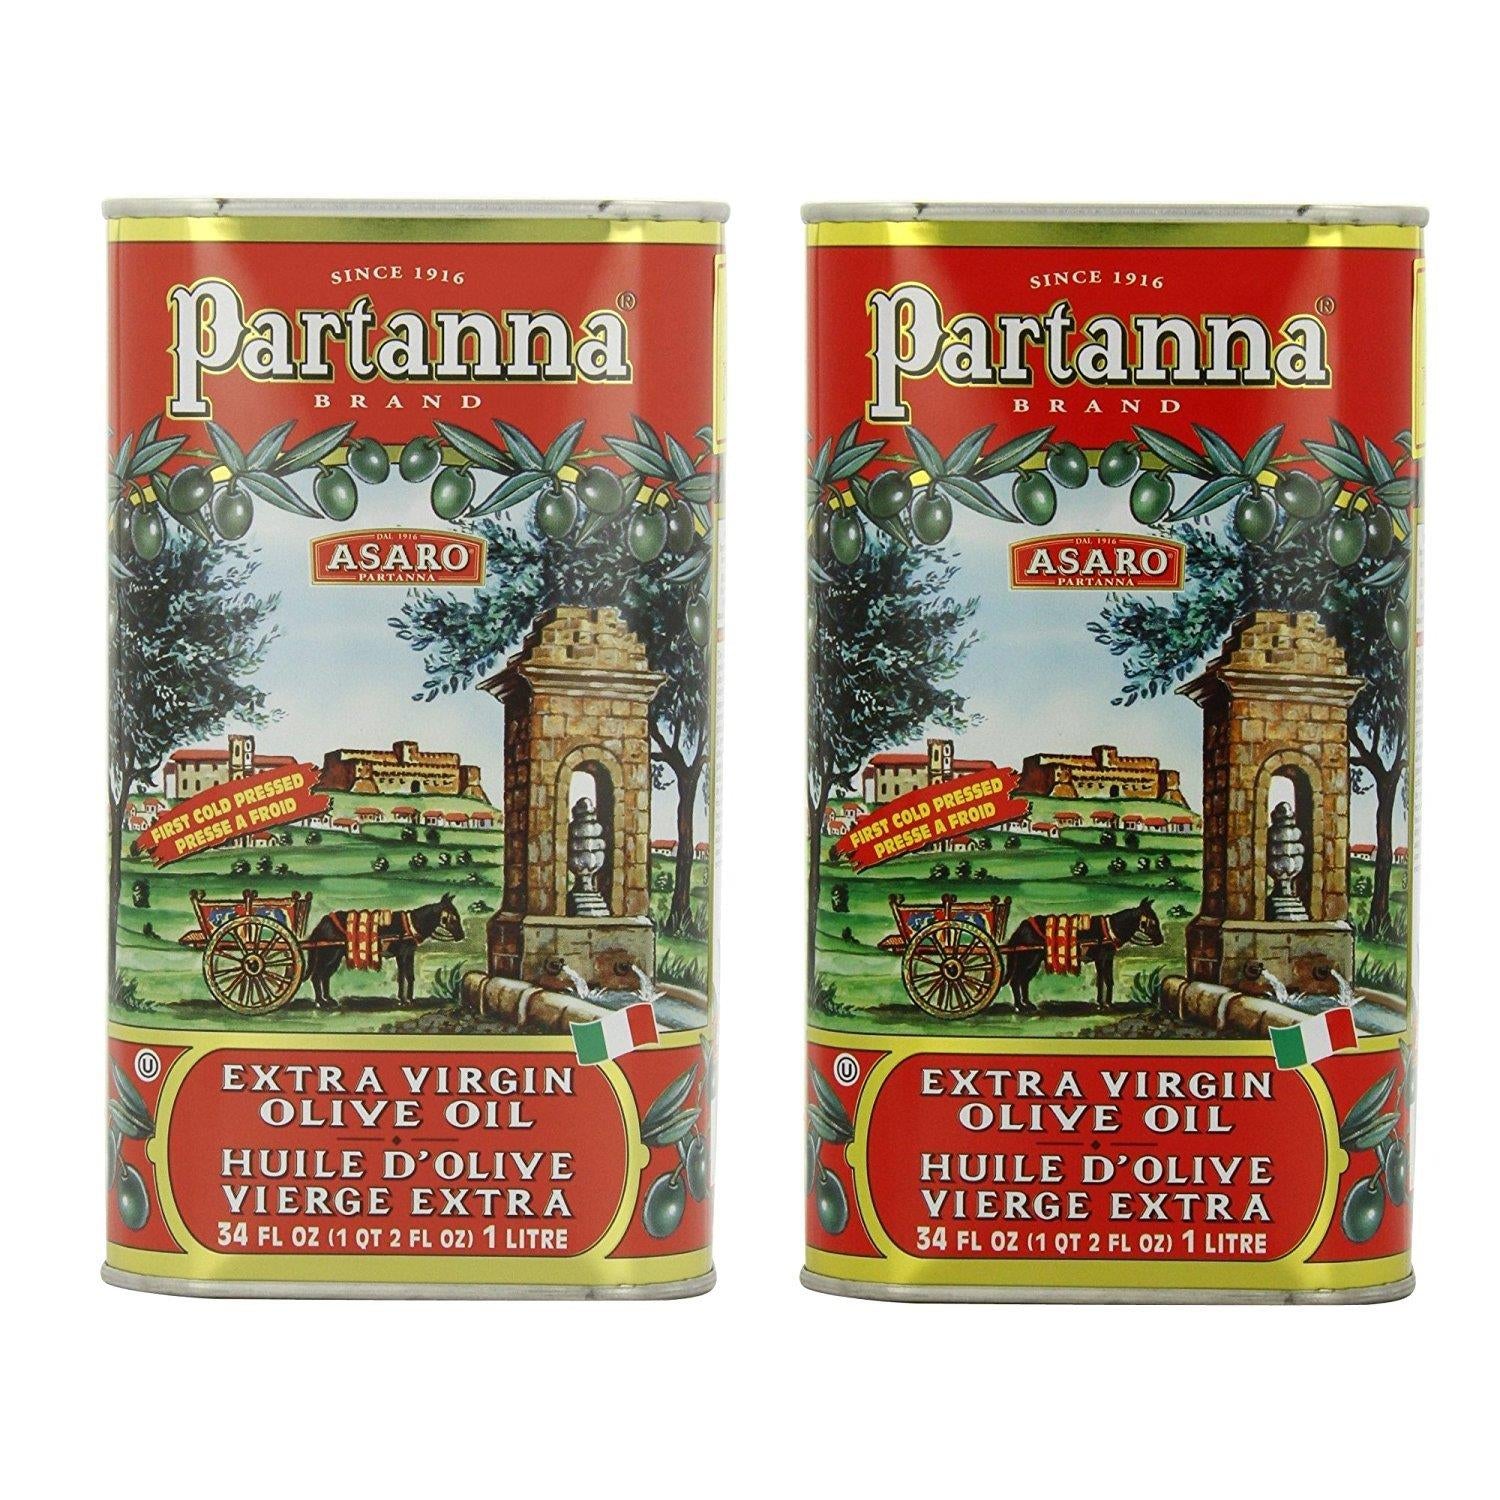 Partanna Extra Virgin Olive Oil, 34 Fl Oz (Pack of 2)